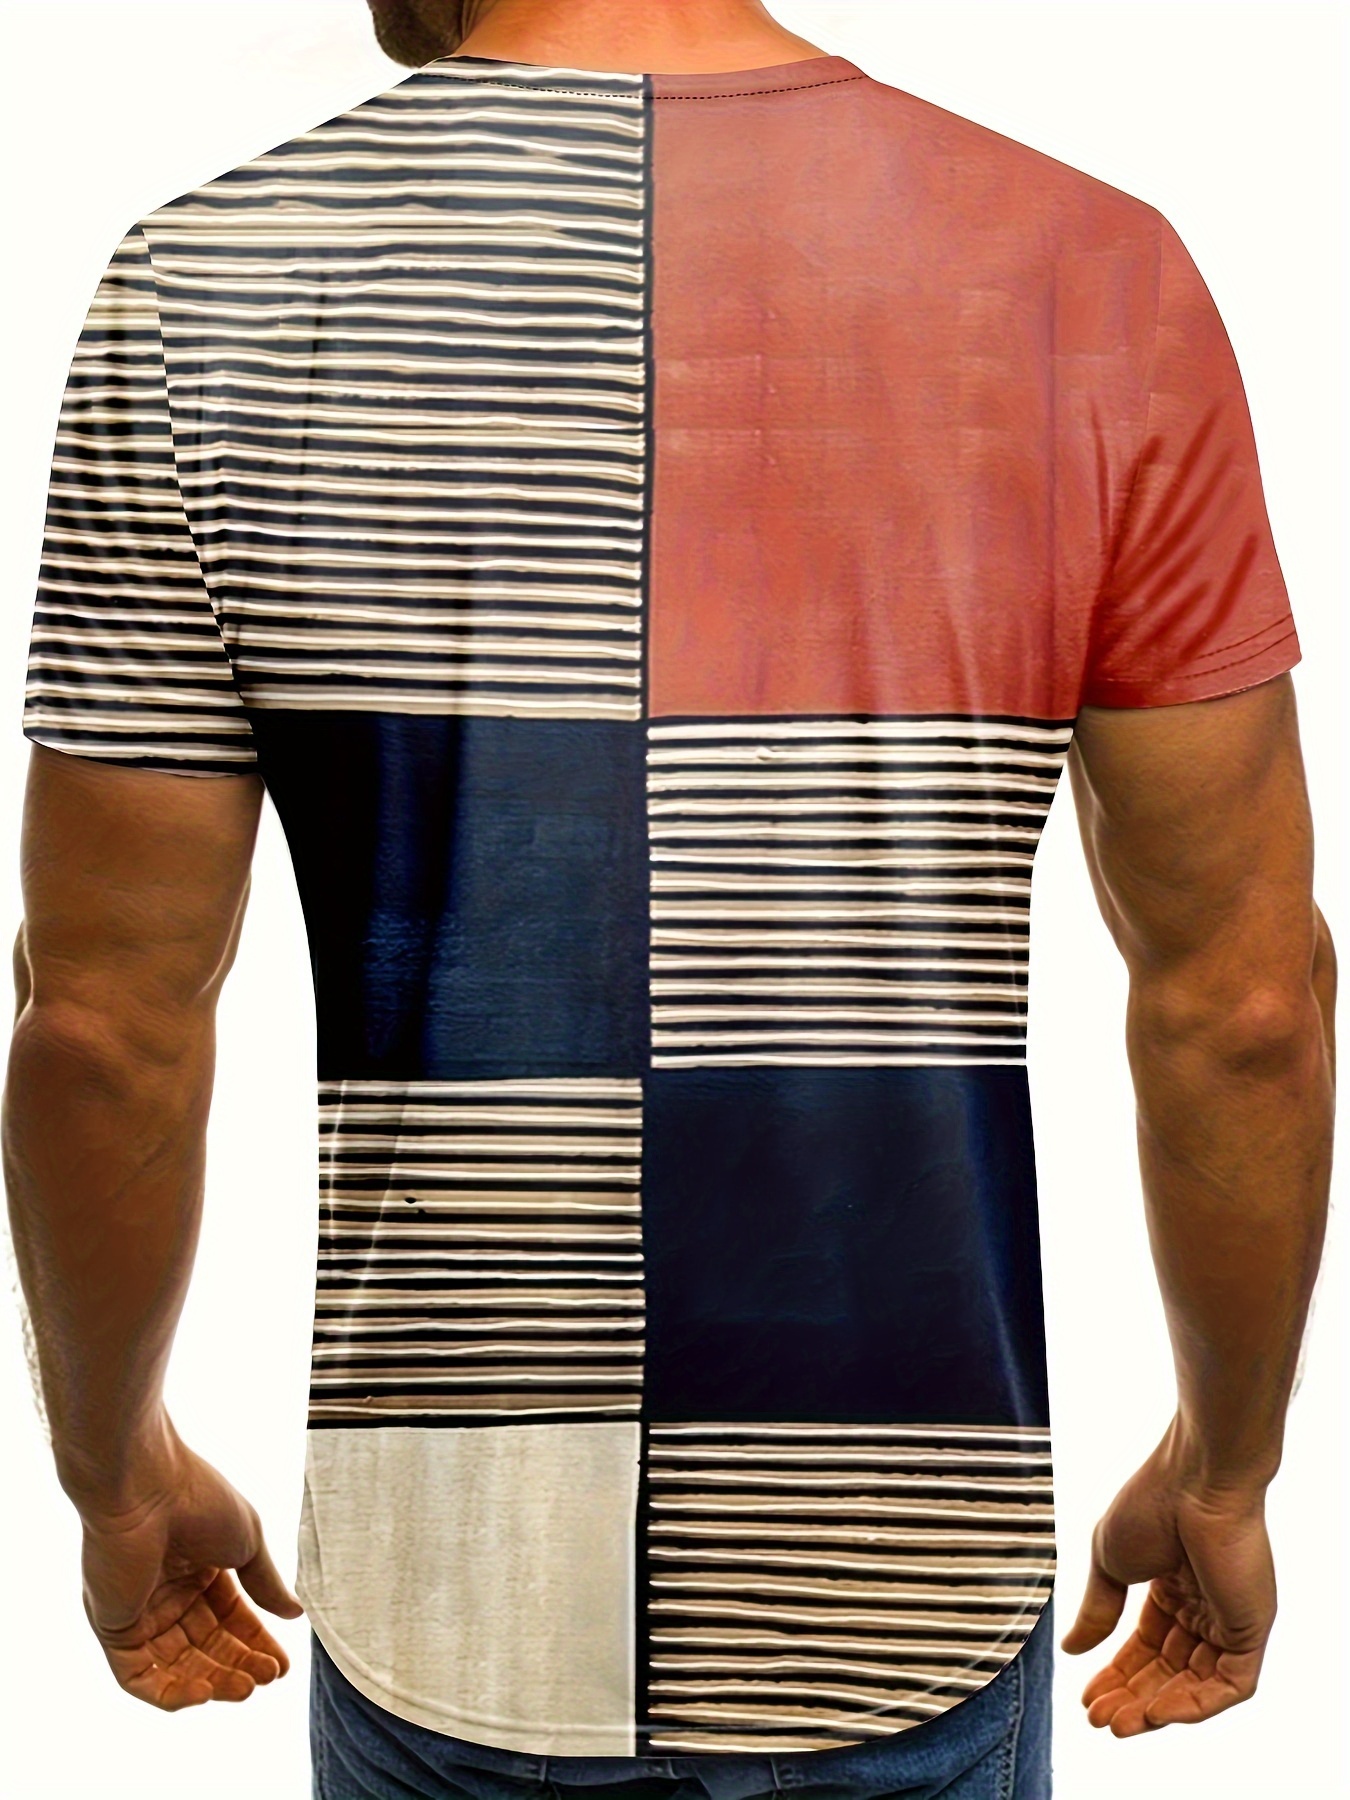 B91xZ Shirts For Men Male Summer Casual Striped Fabric T Shirt